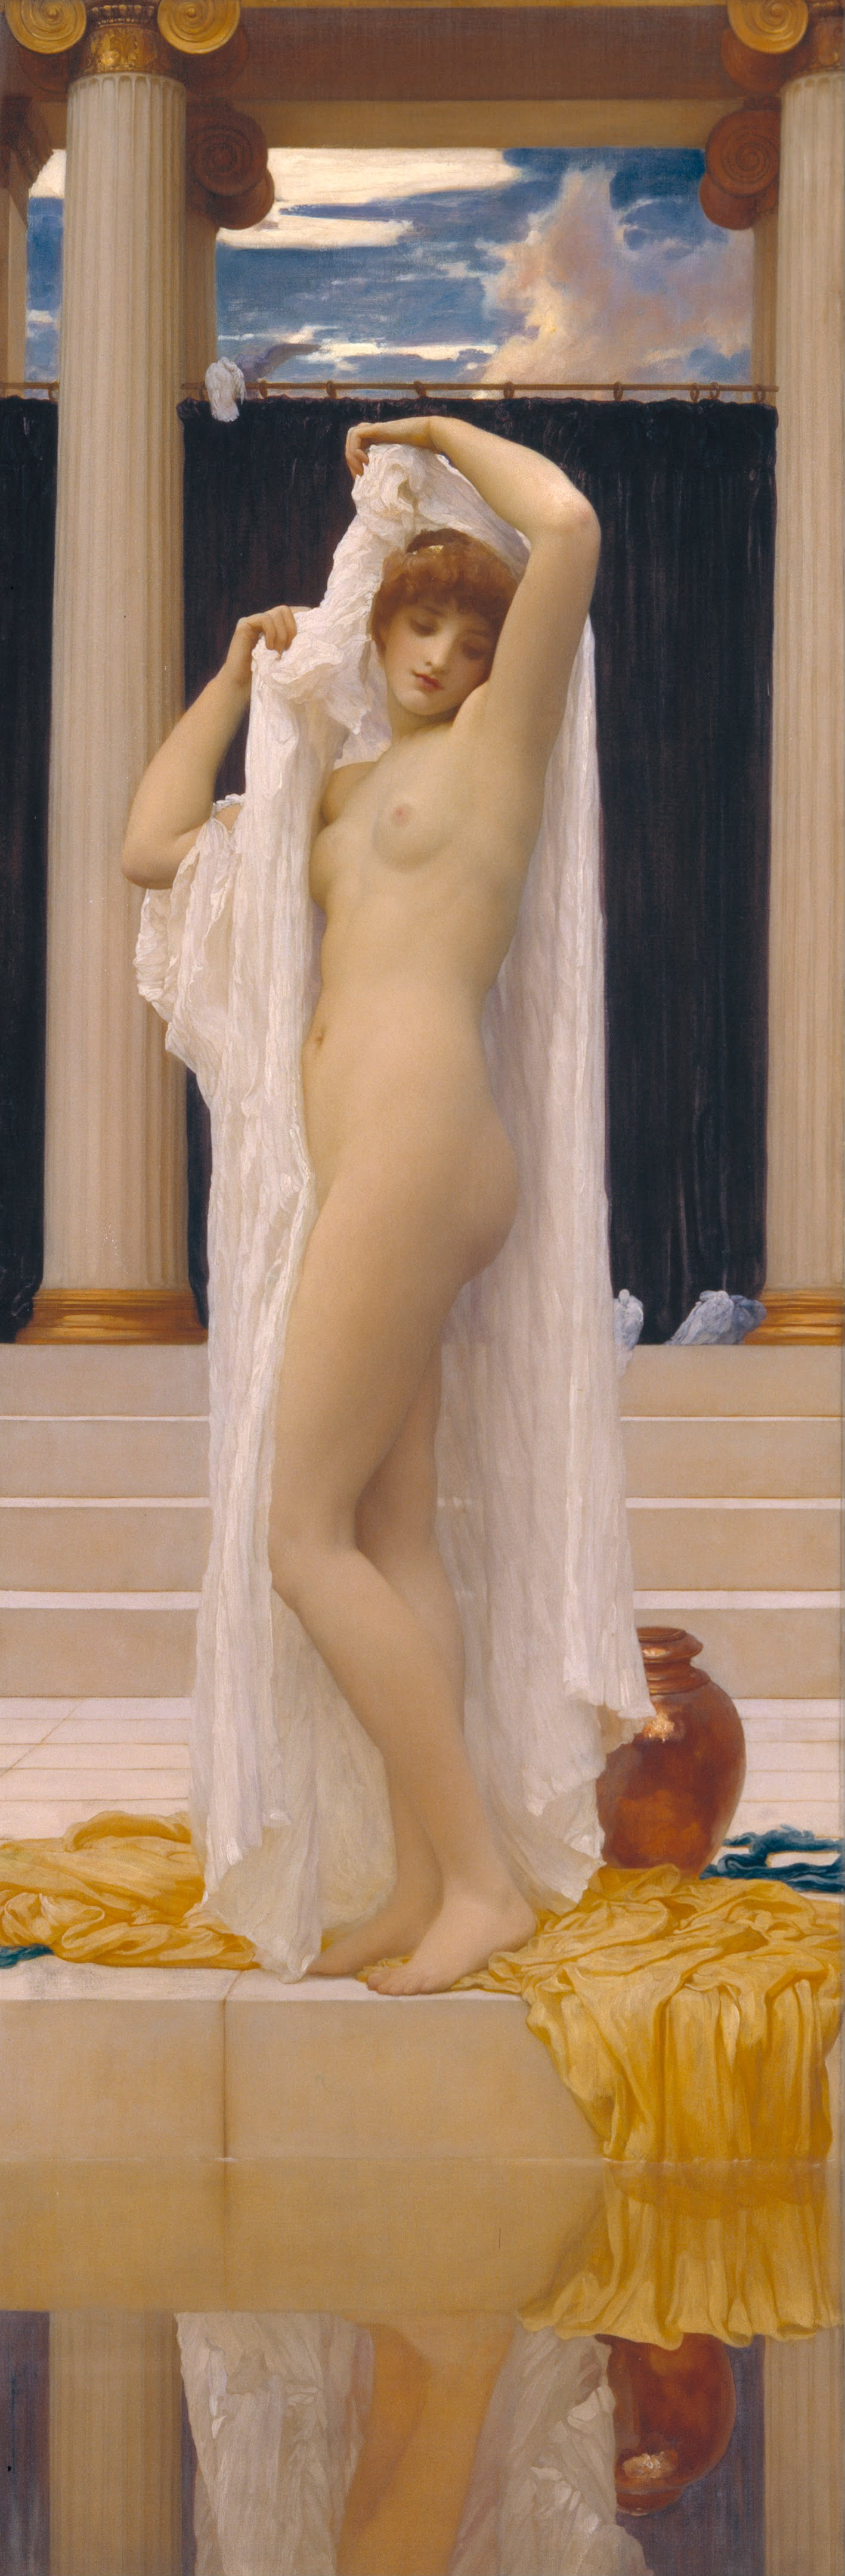 Frederick Leighton, 1830-1896. Купание Психеи. 189.2 х 62.2 см. Лондон, галерея Тейт